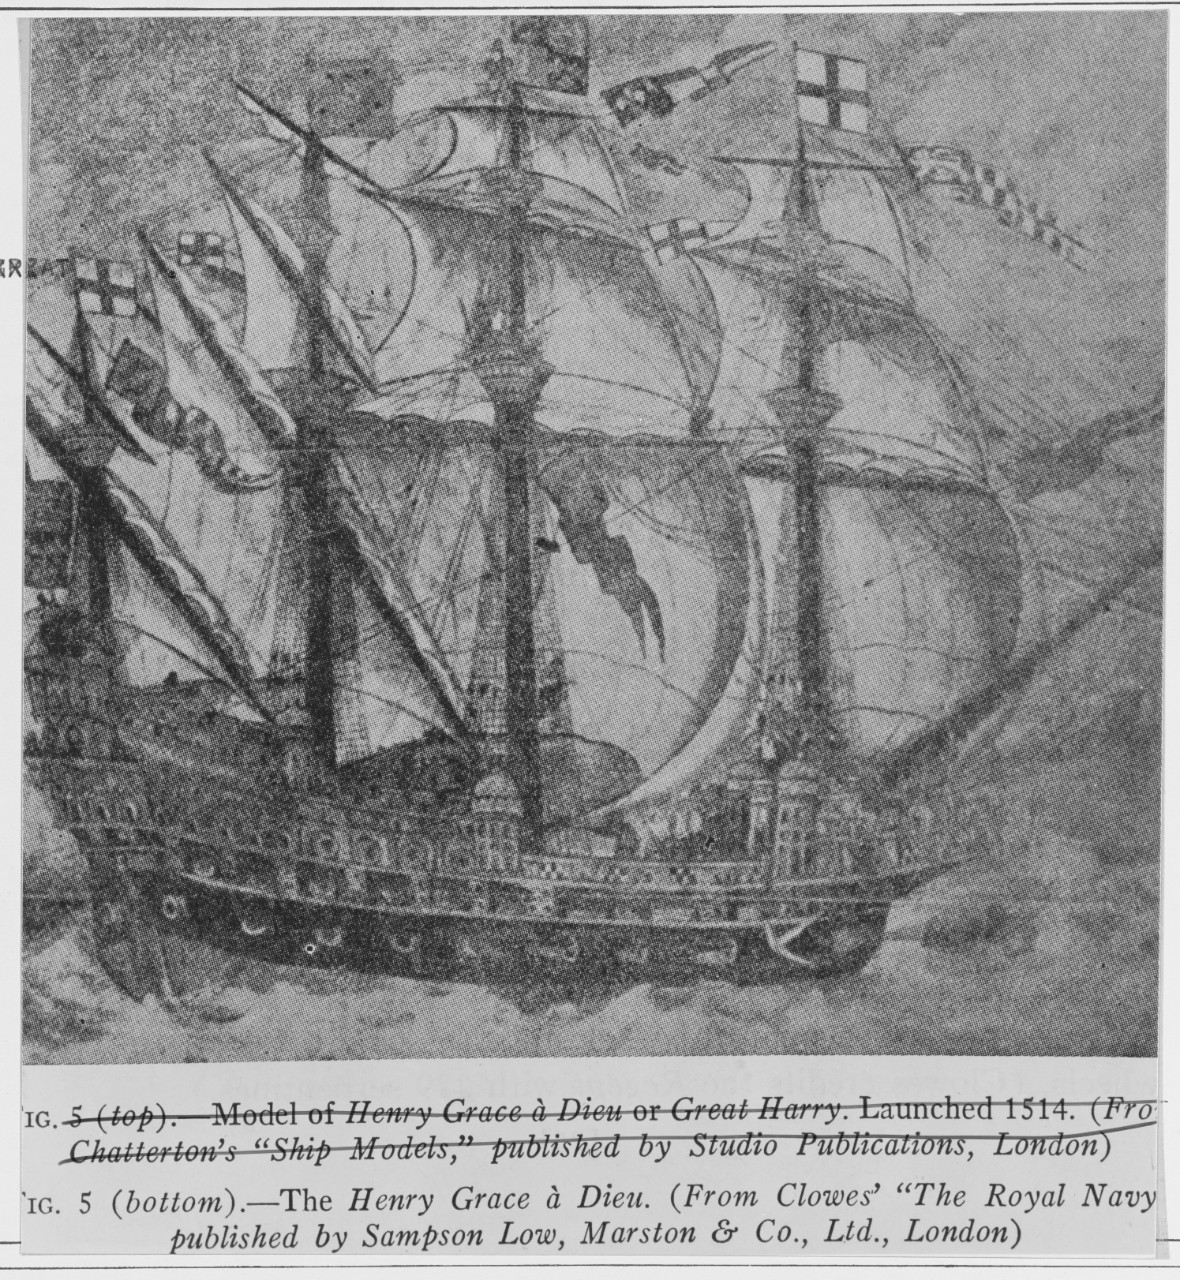 HMS HENRY GRACE A' DIEU British battleship, 1514, also called "Great Harry"